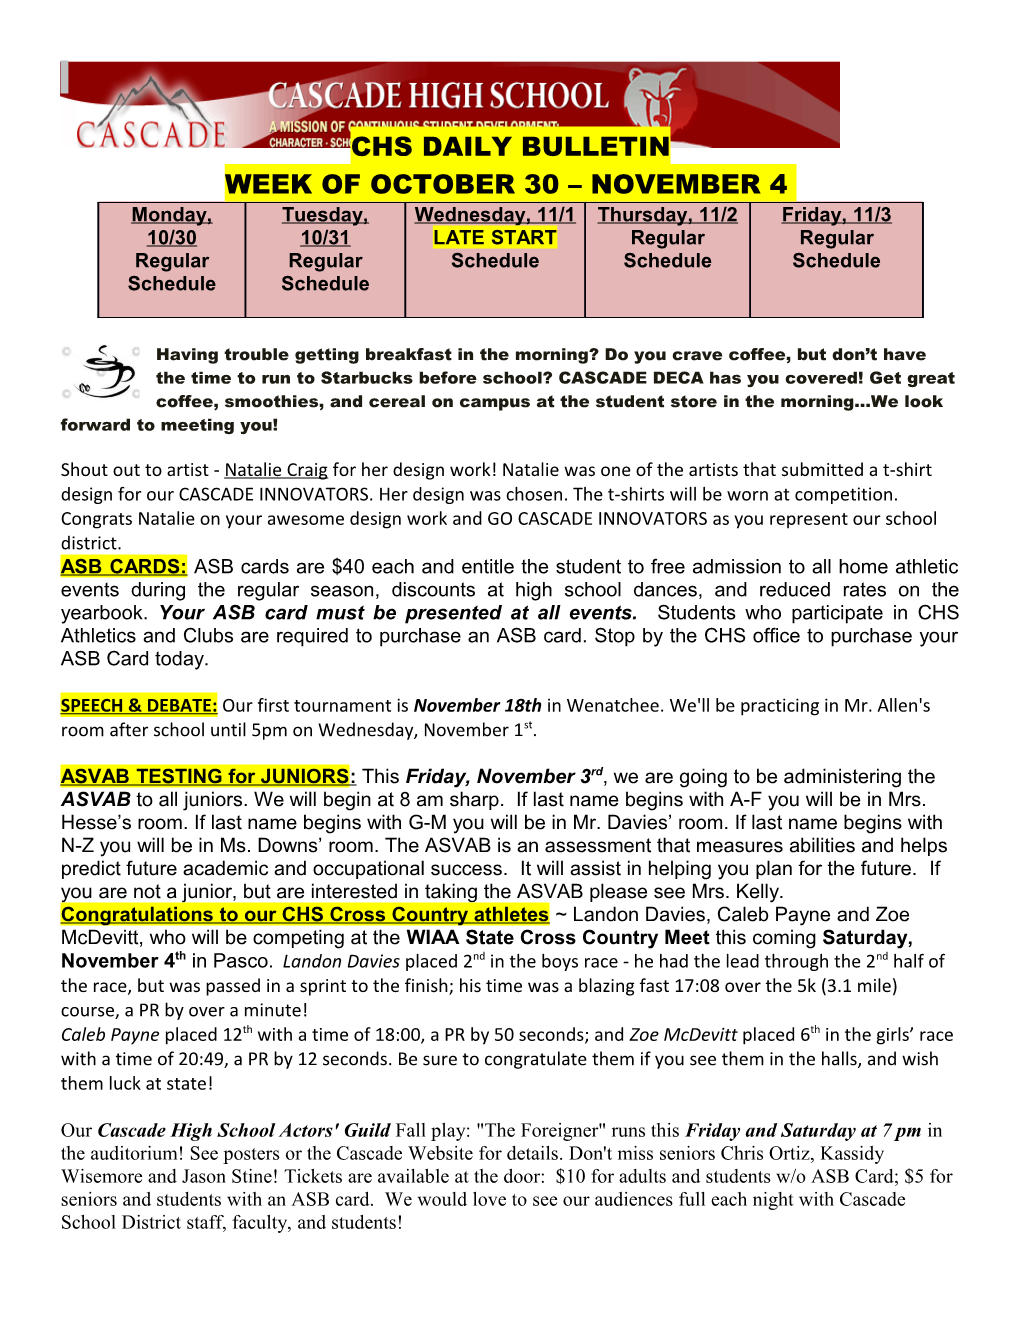 Chs Daily Bulletin Week of October 30 November 4